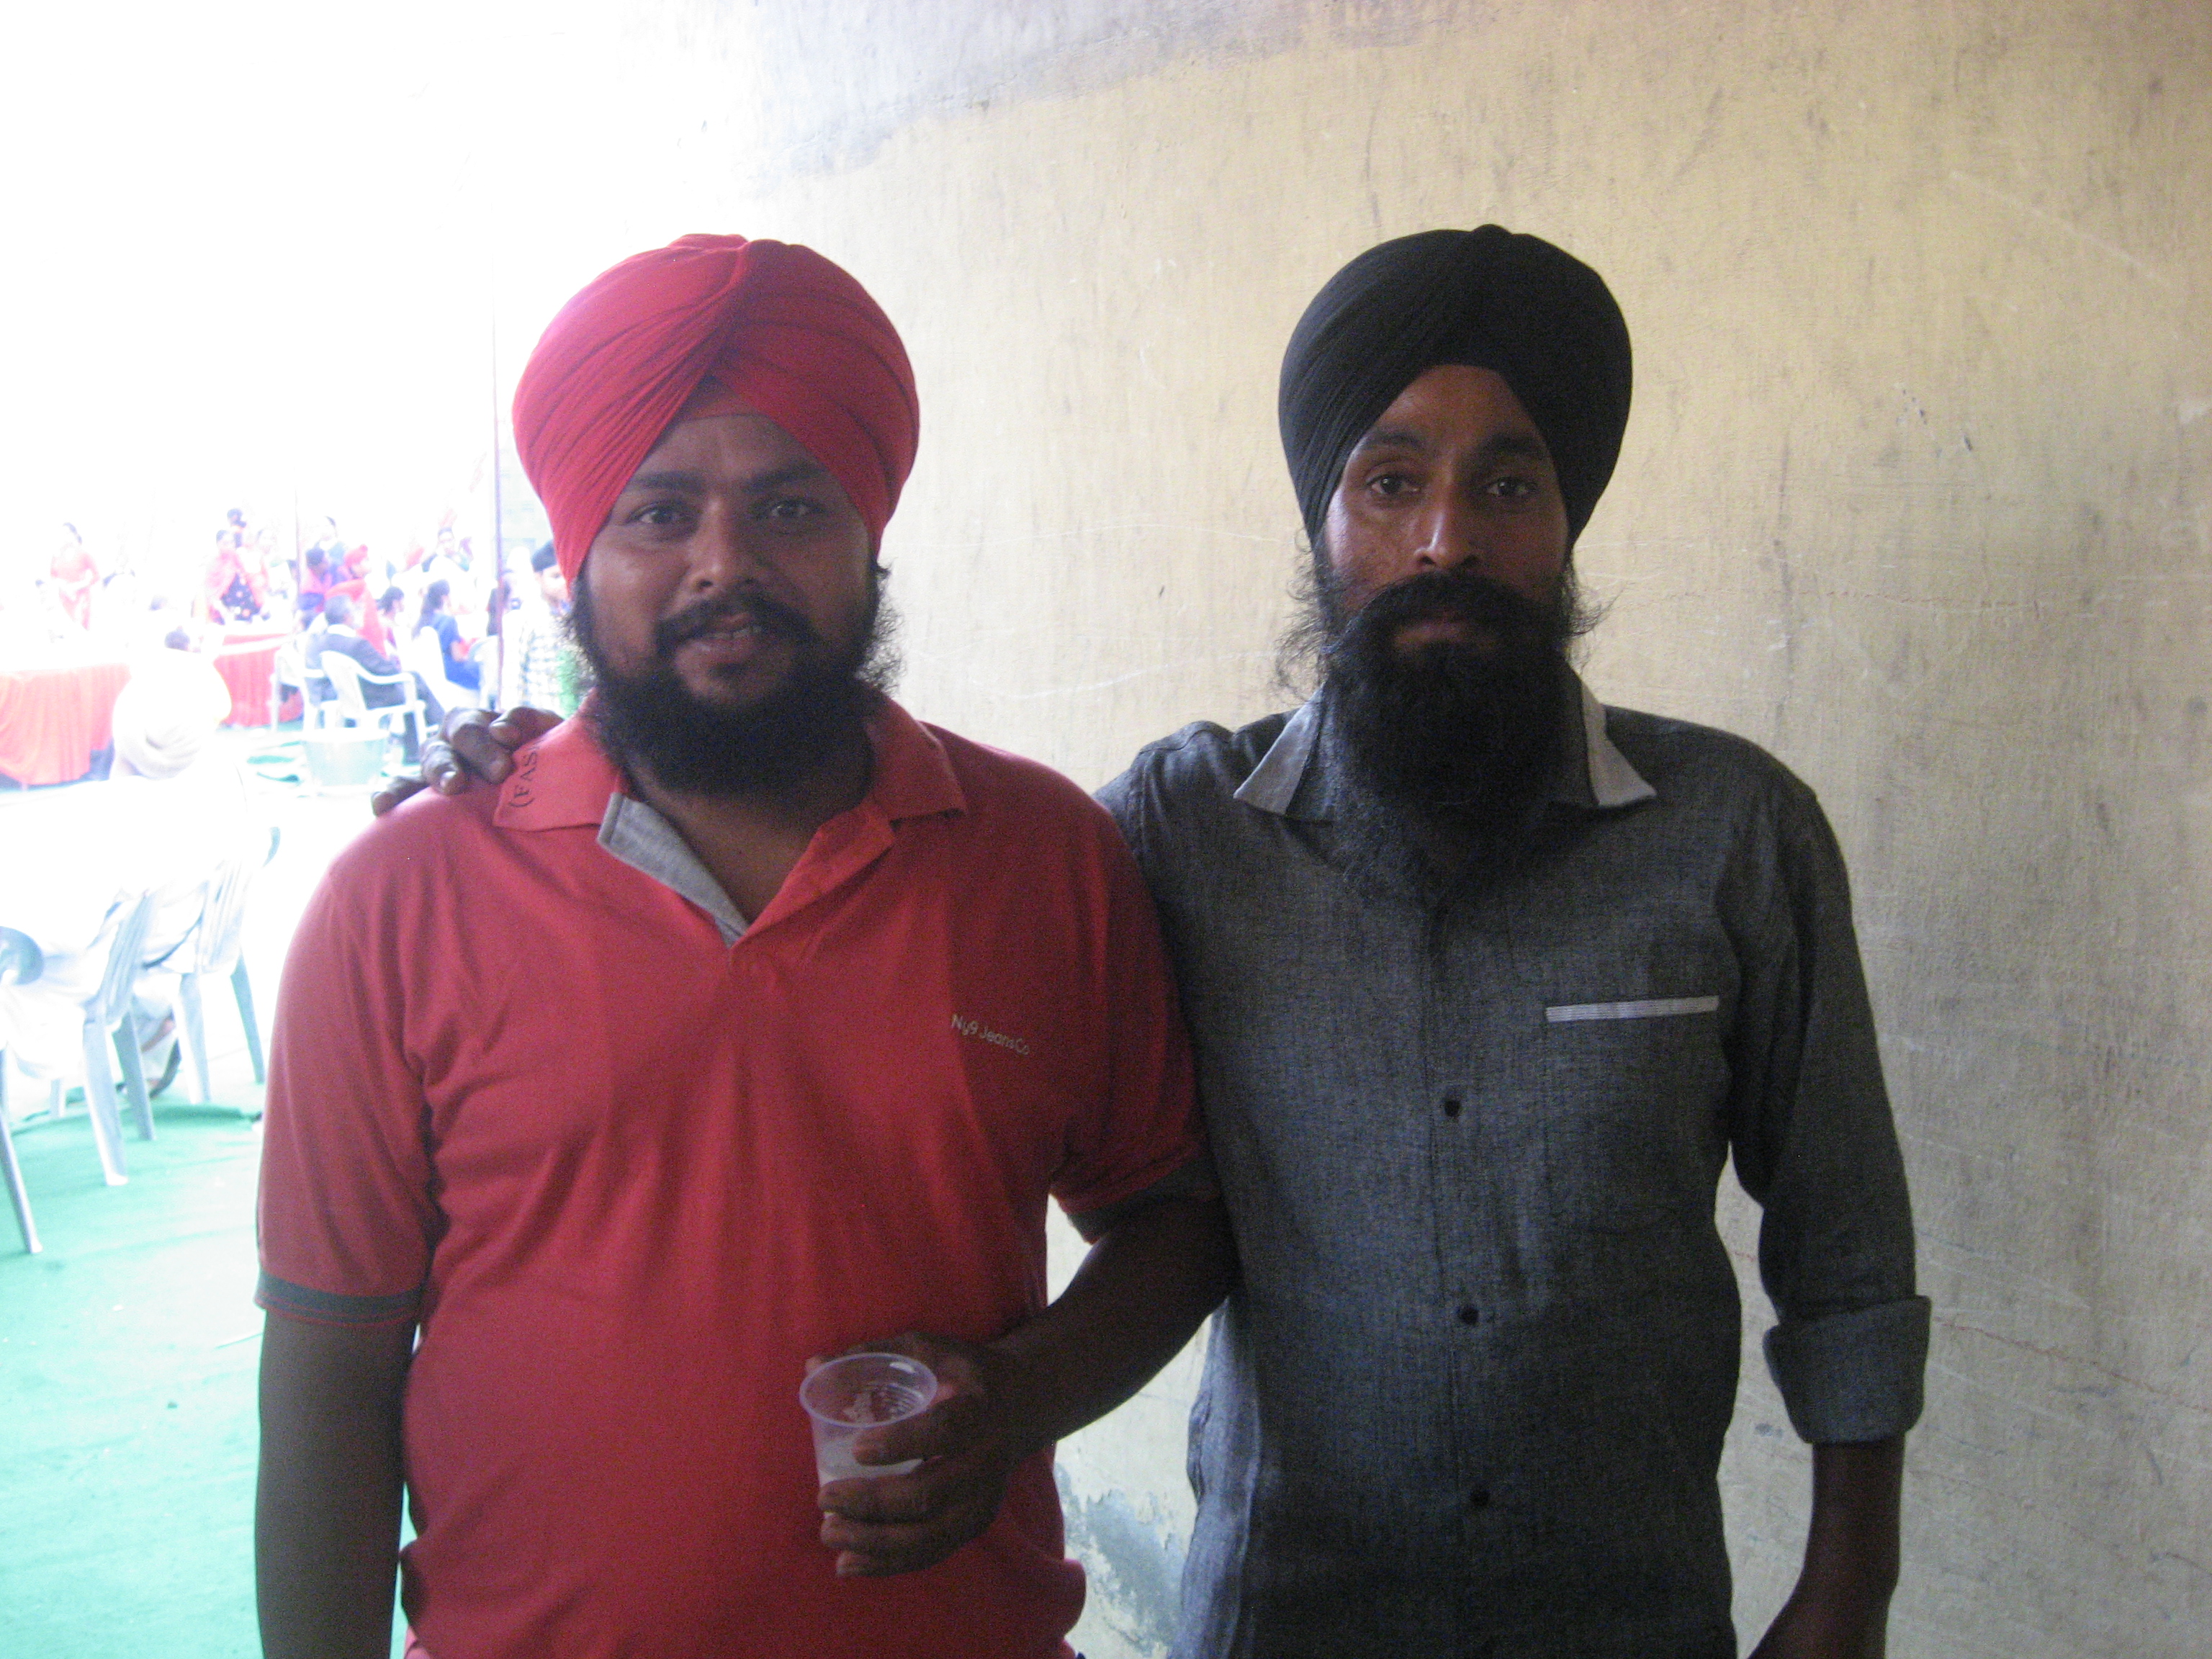 Sikh and tired - Delhi towards Nepal